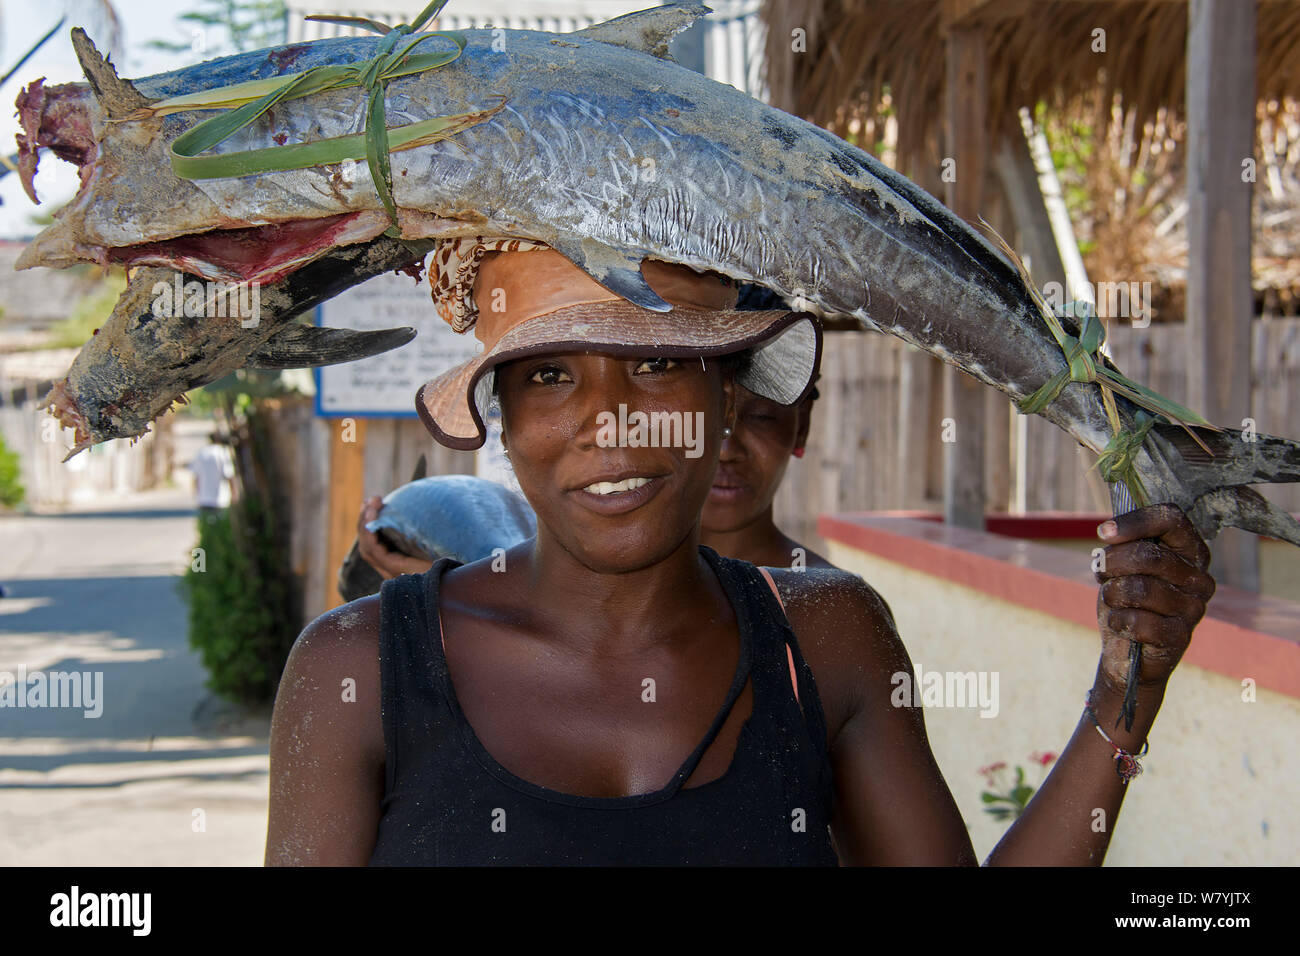 Woman carrying fish on the head, Morondave, Madagascar. November 2014. Stock Photo